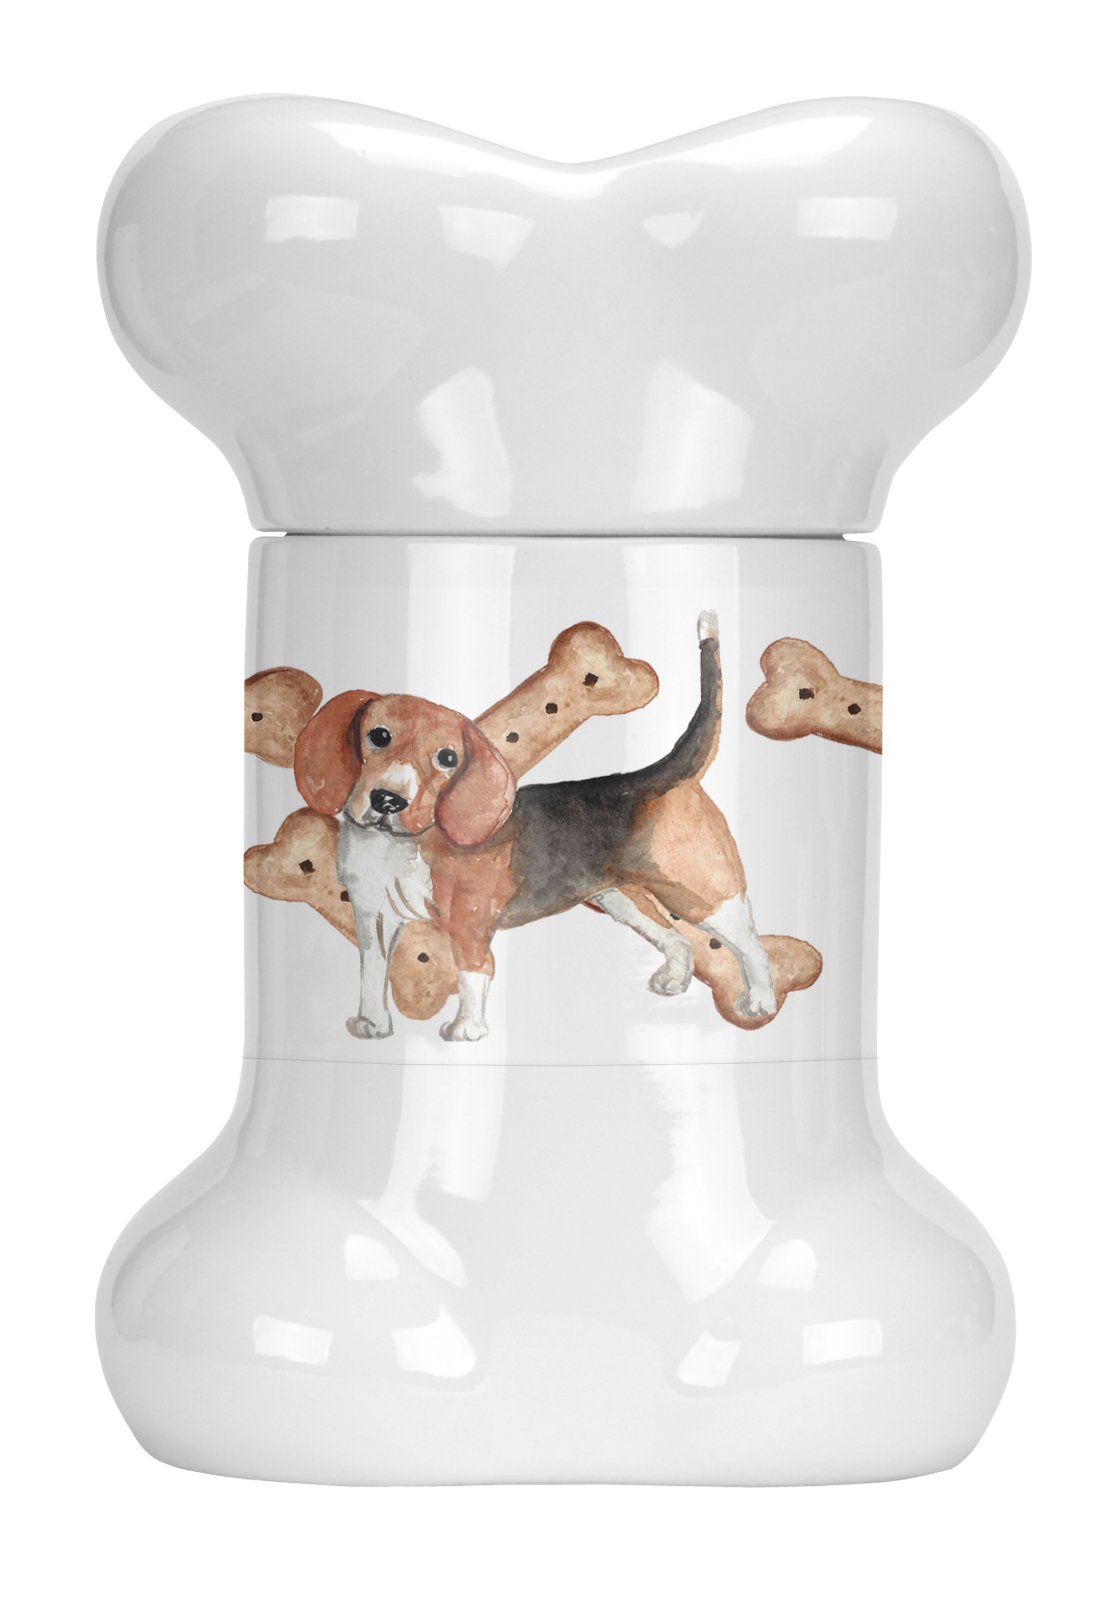 Beagle Puppy Bone Shaped Treat Jar CK2367BSTJ by Caroline's Treasures